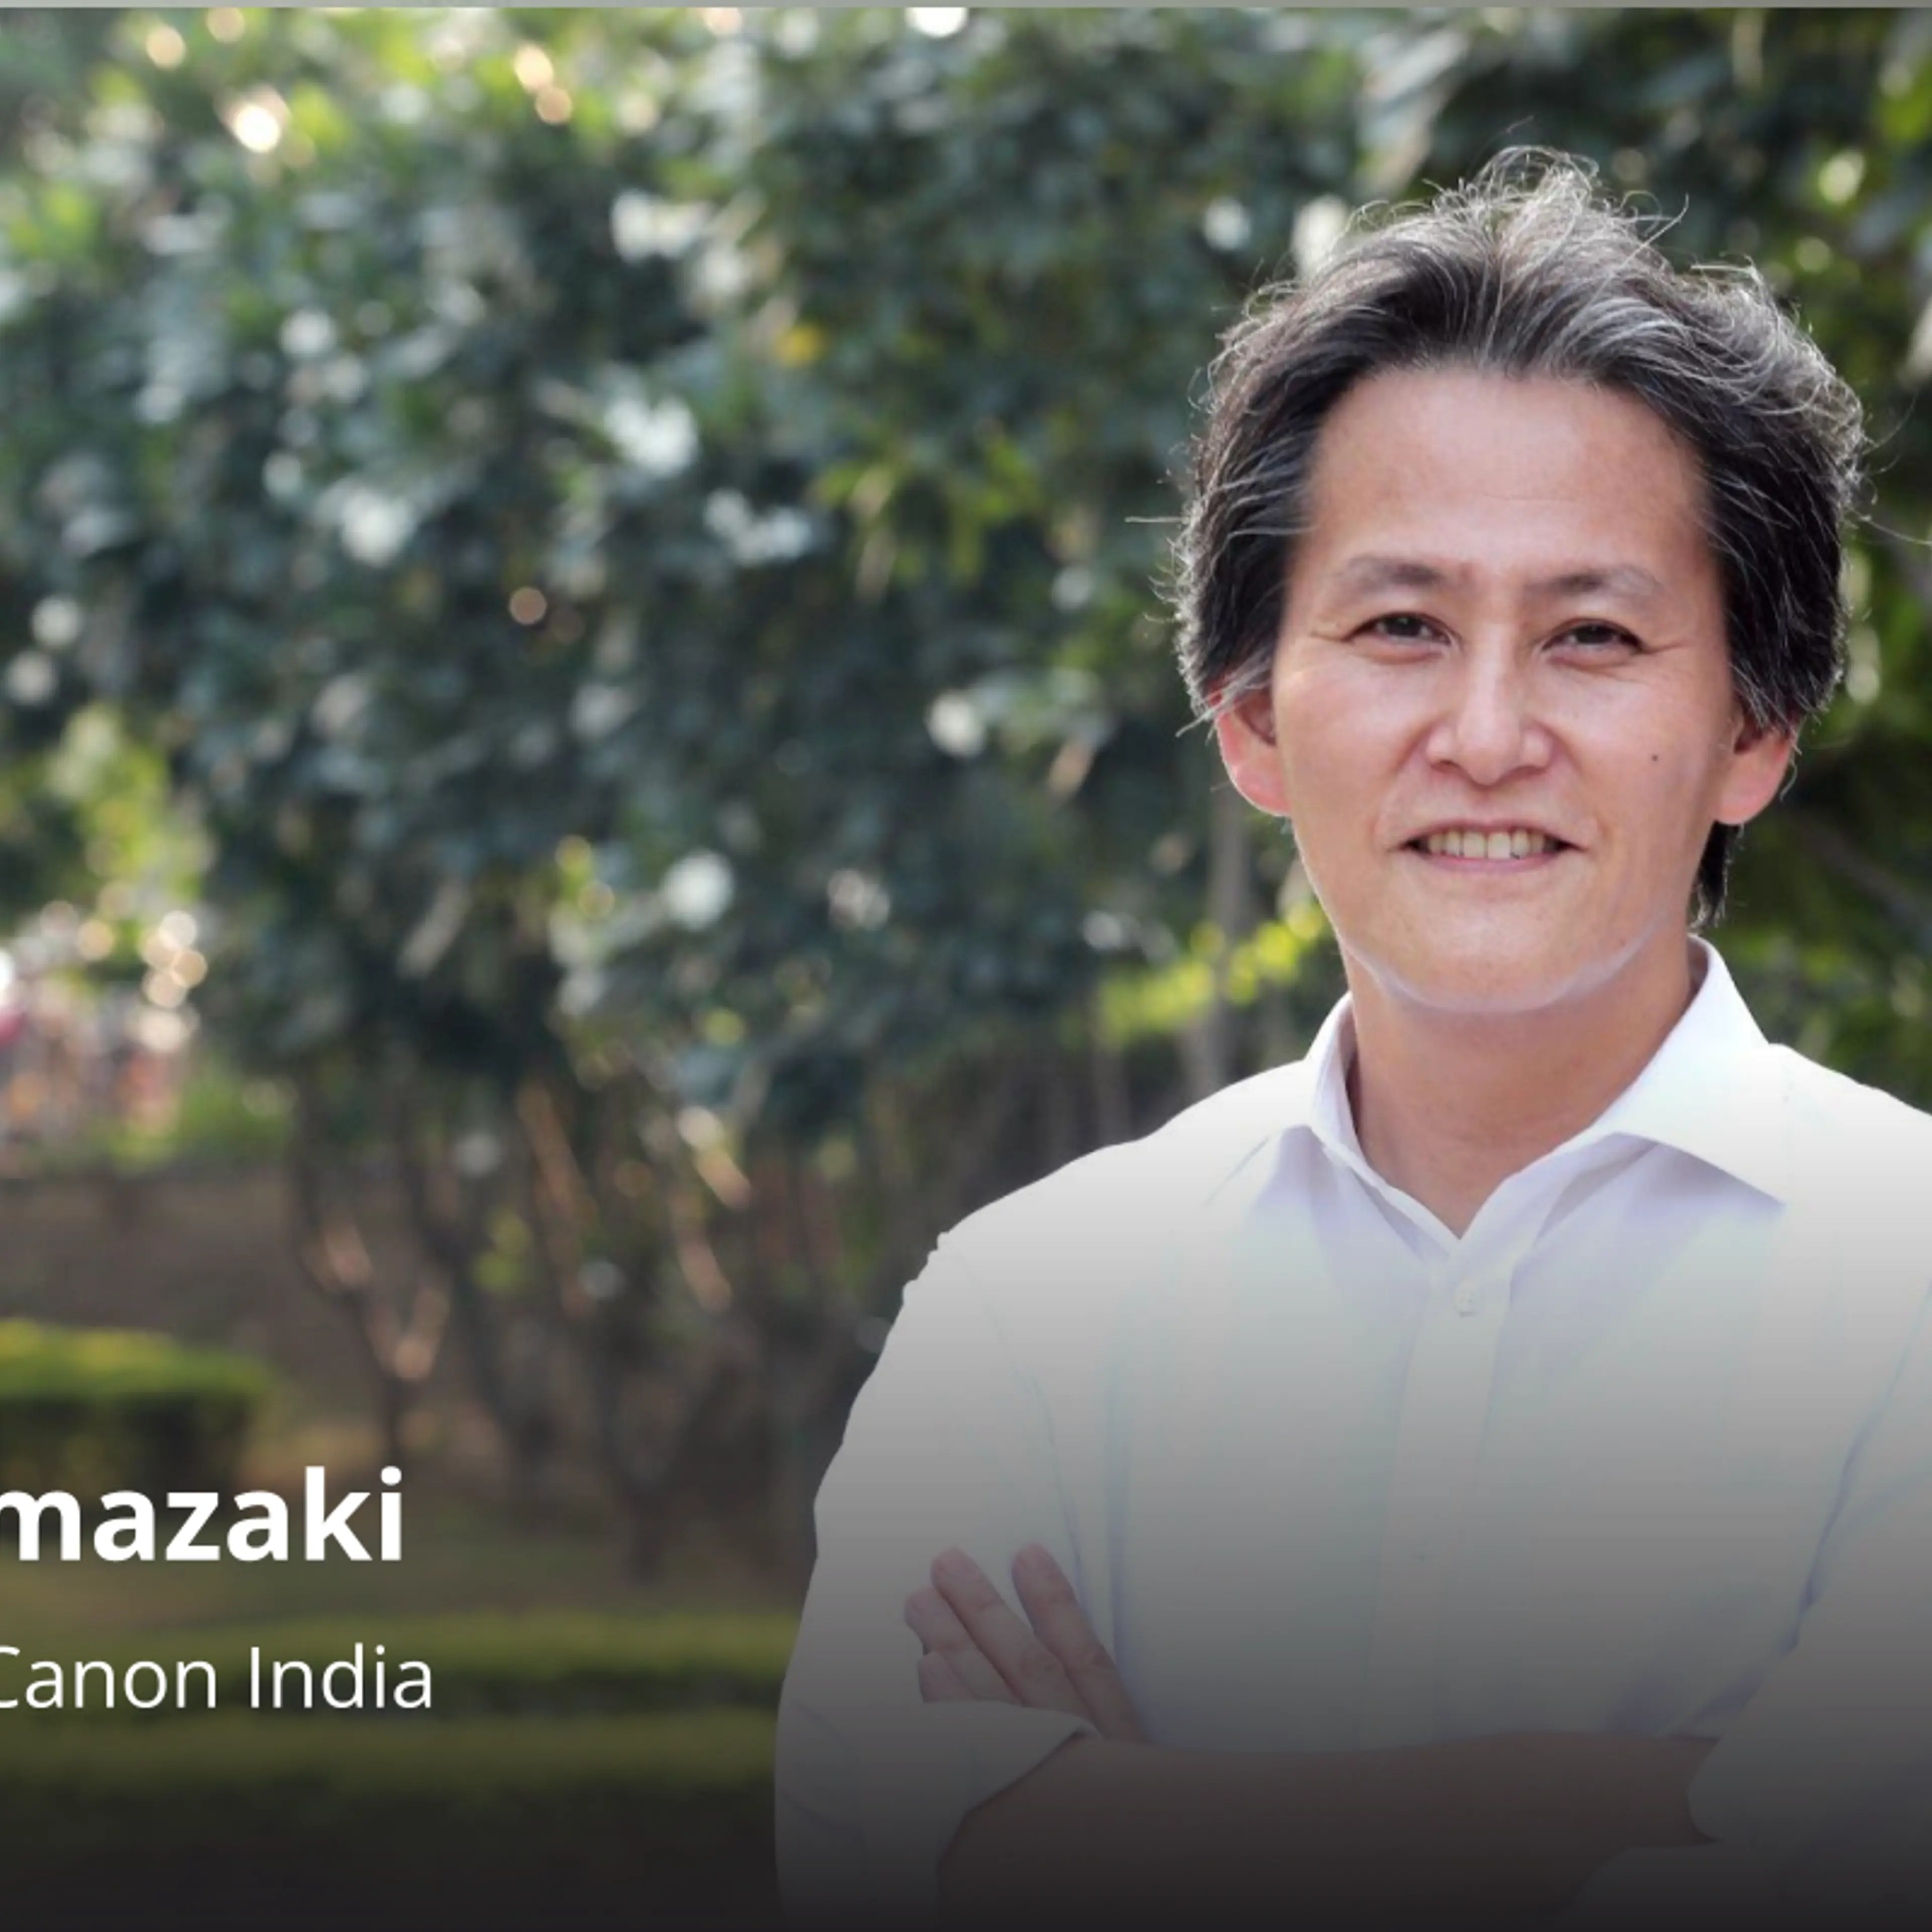 India is a frontier market for Canon, says India CEO Manabu Yamazaki

